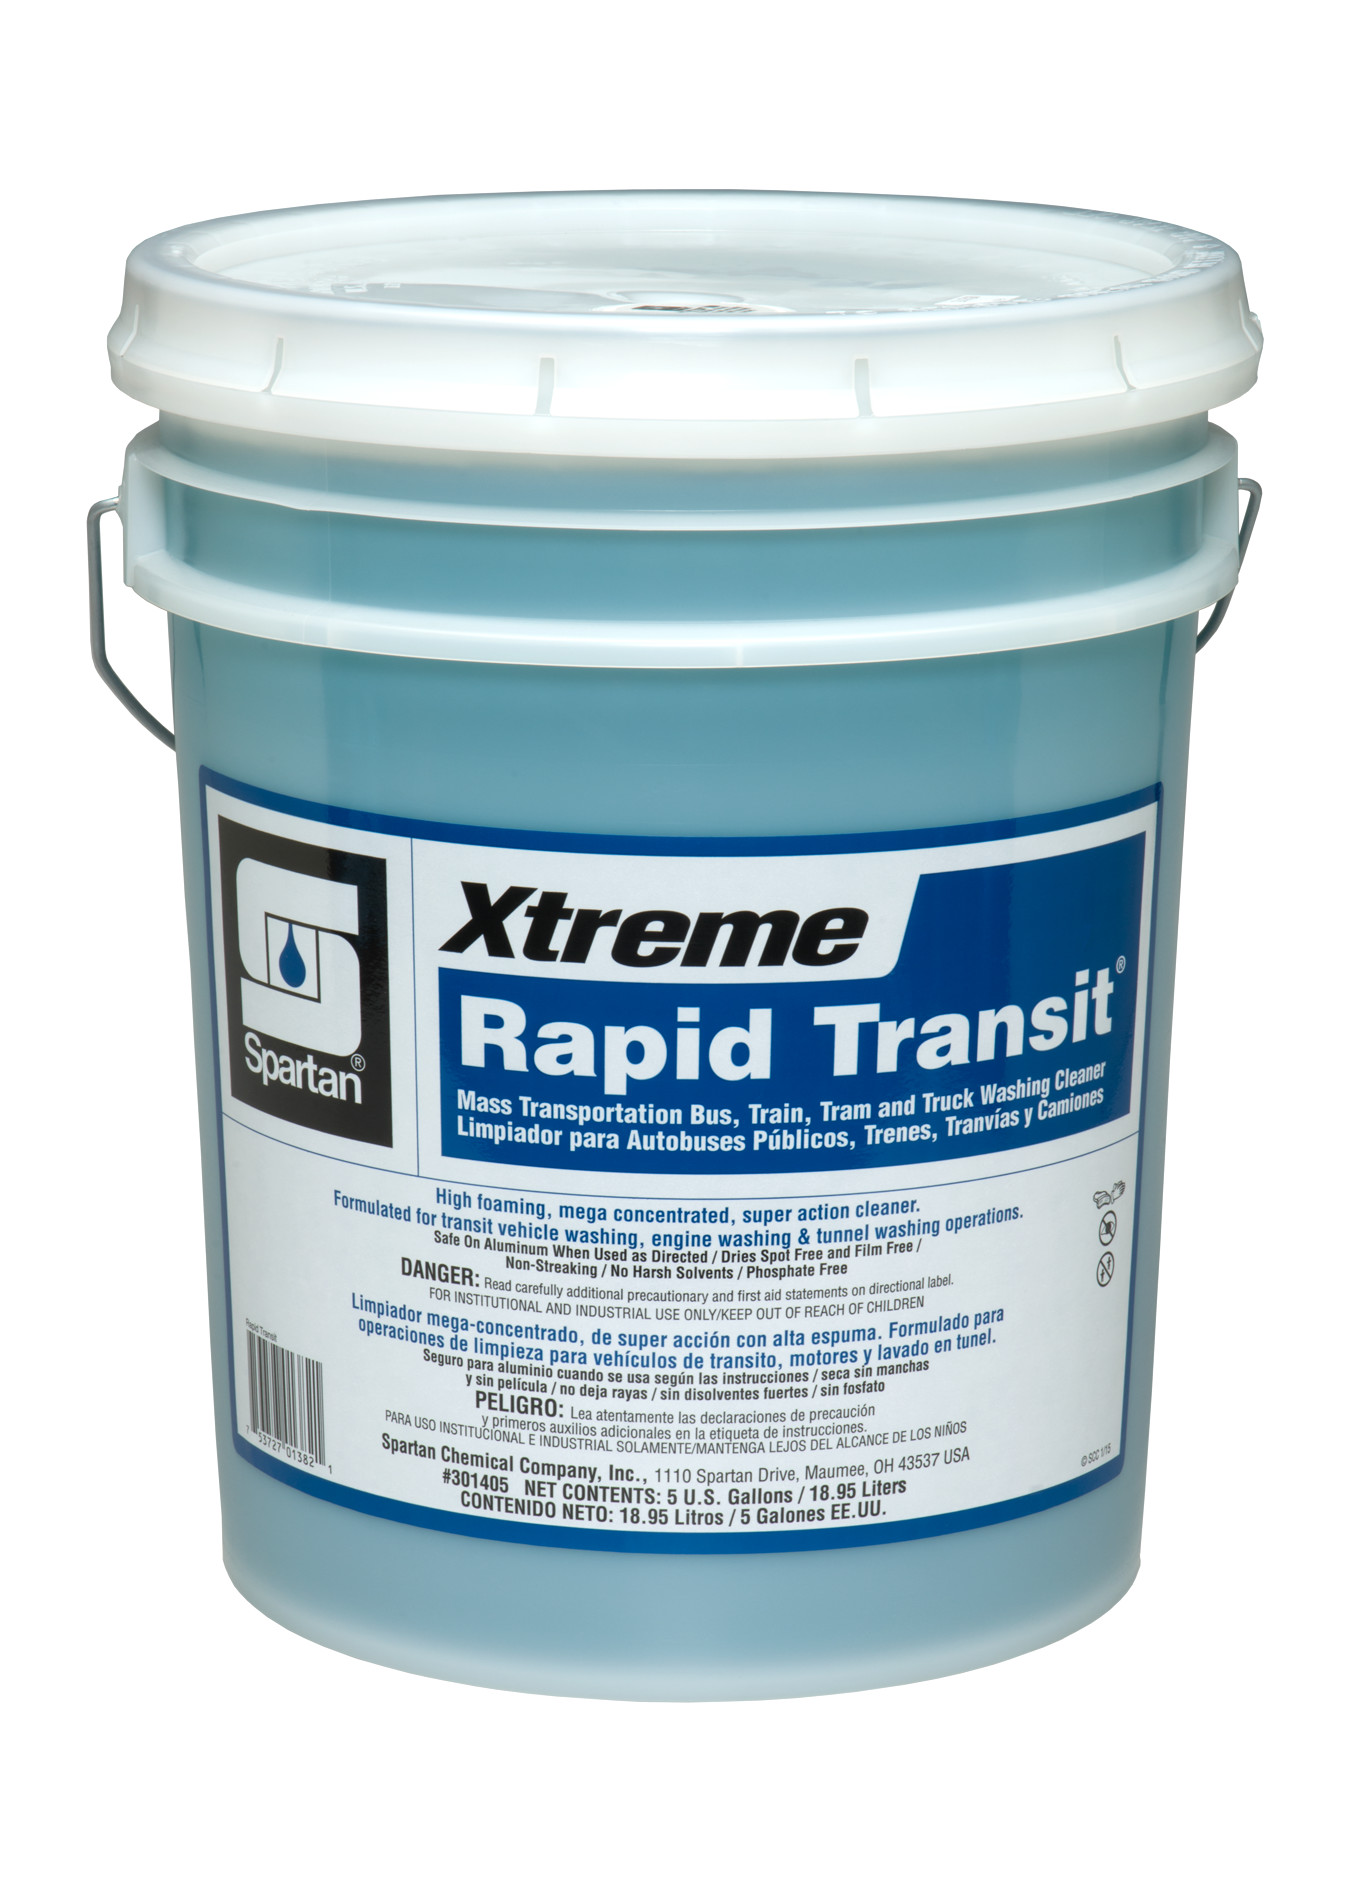 Spartan Chemical Company Xtreme Rapid Transit, 5 GAL PAIL